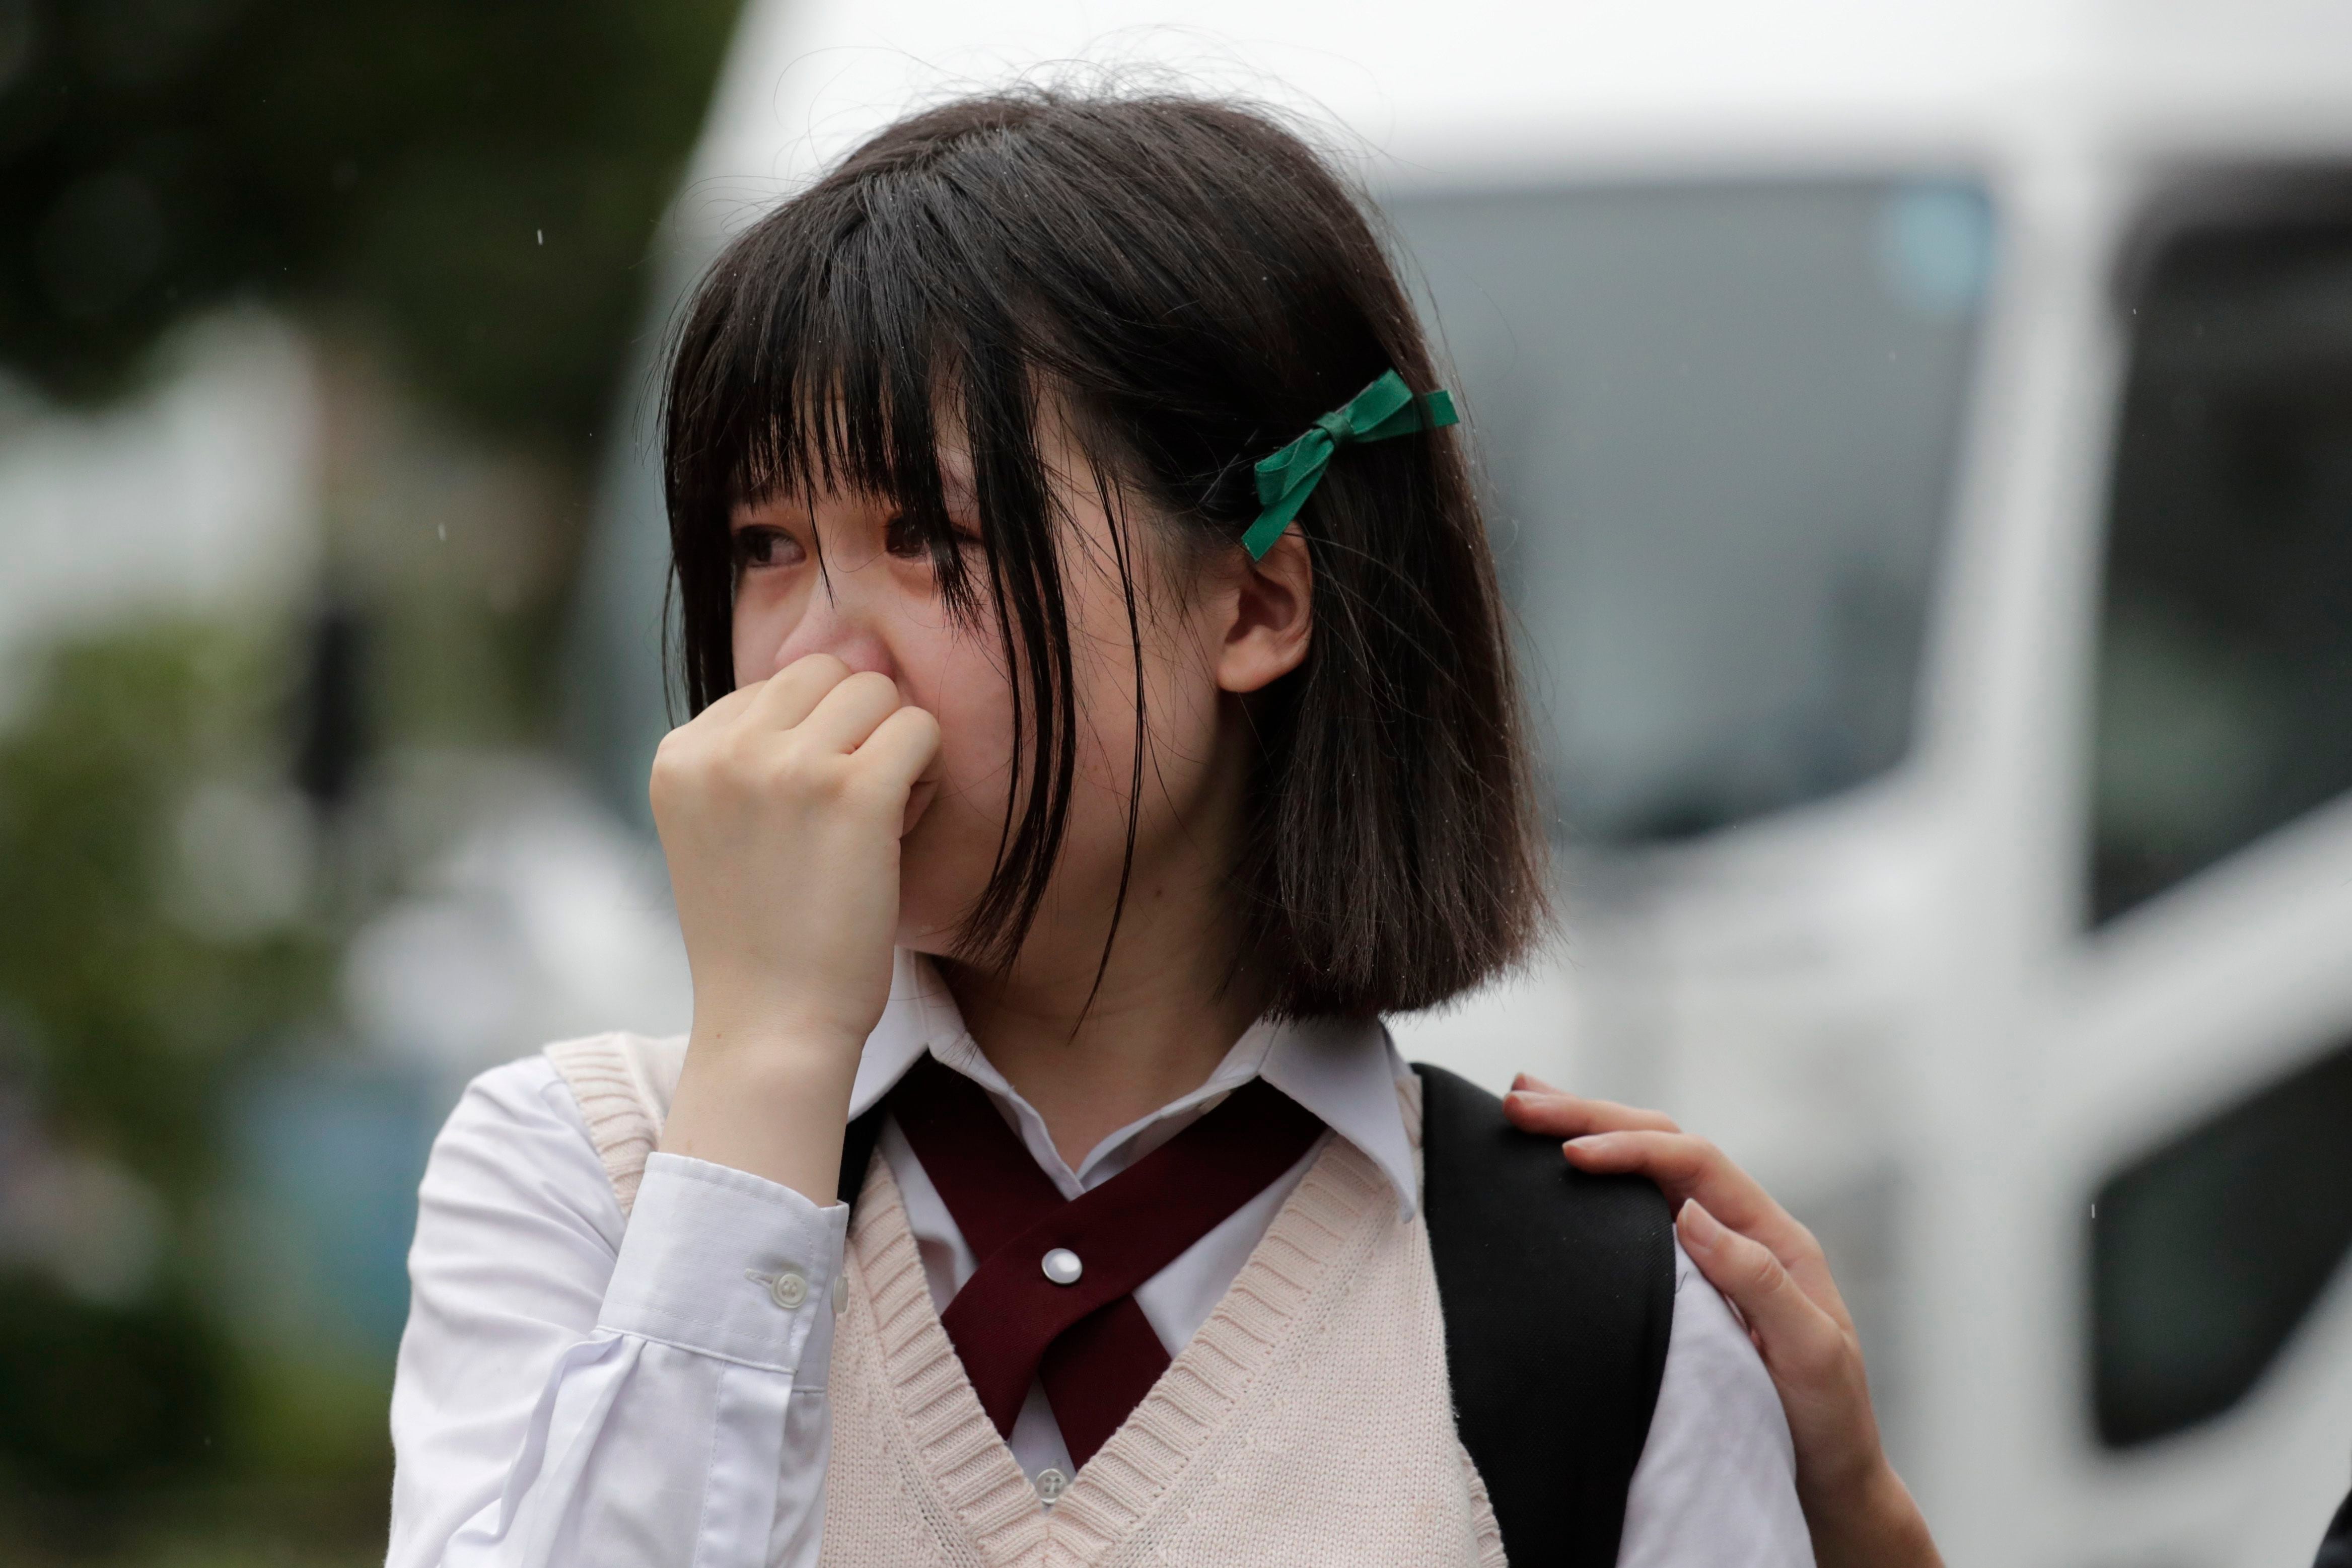 Suspect in Japan anime studio arson reportedly had grudge